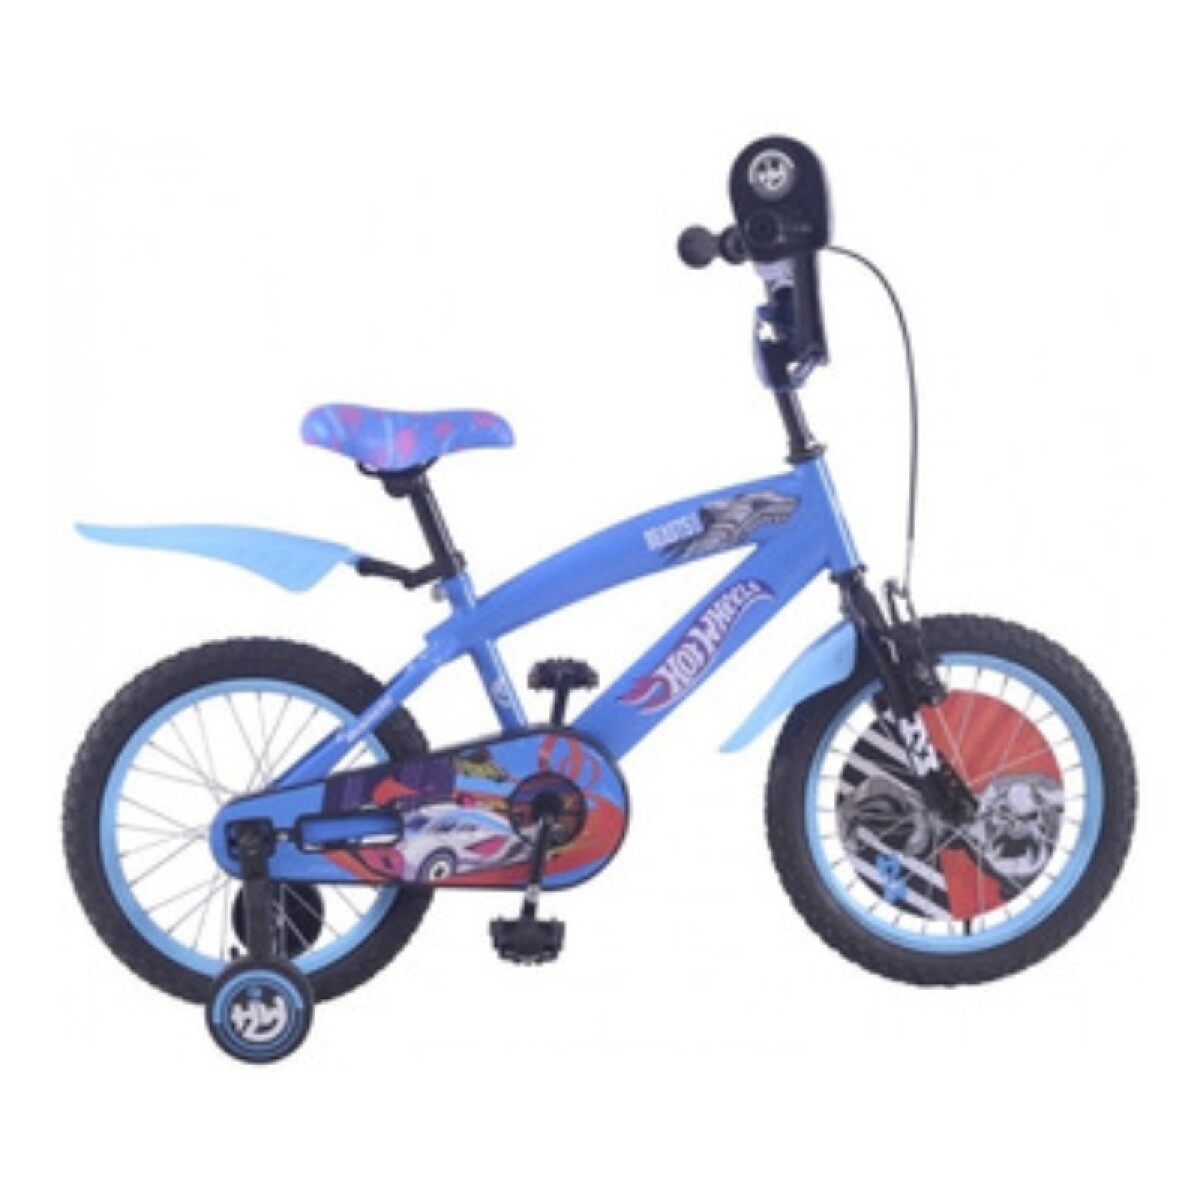 Bicicleta Hotwheels R.16 Niño - Azul 